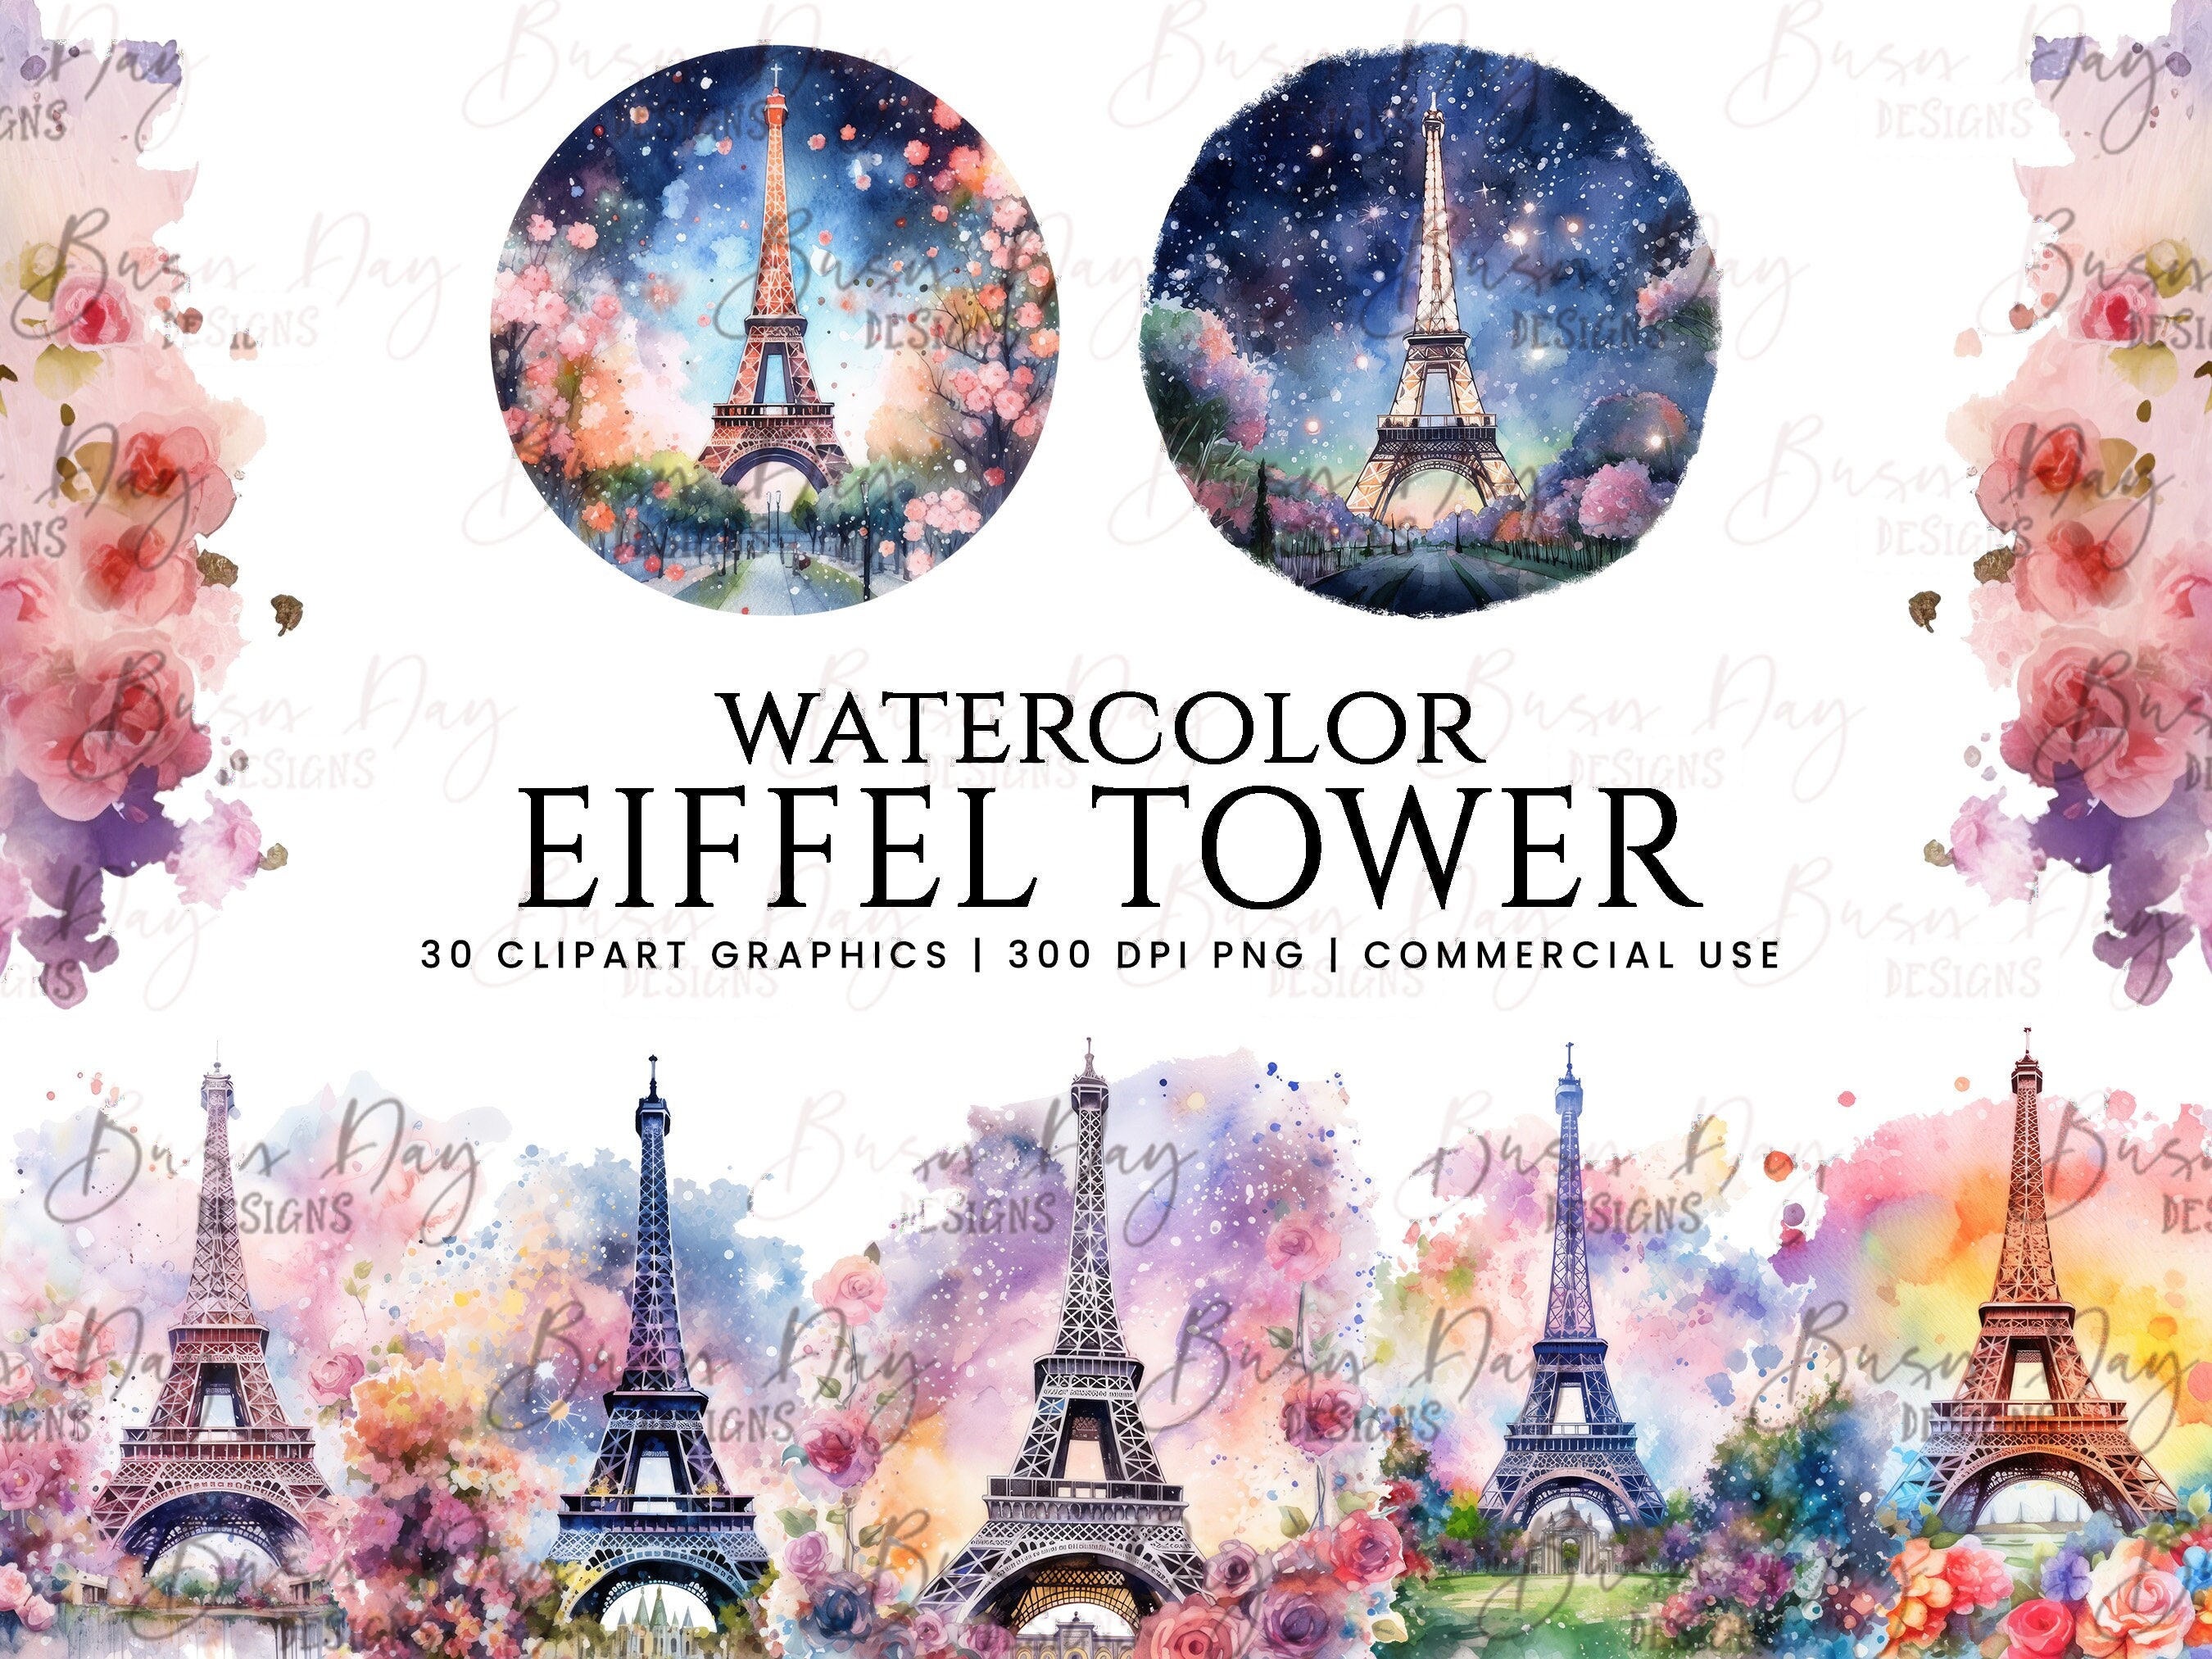 Paris France Vinyl Sticker Sheet Journal Planner Travel Notebook Scrapbook  Self Adhesive Sticker Wanderlust Illustrated Eiffel Tower 